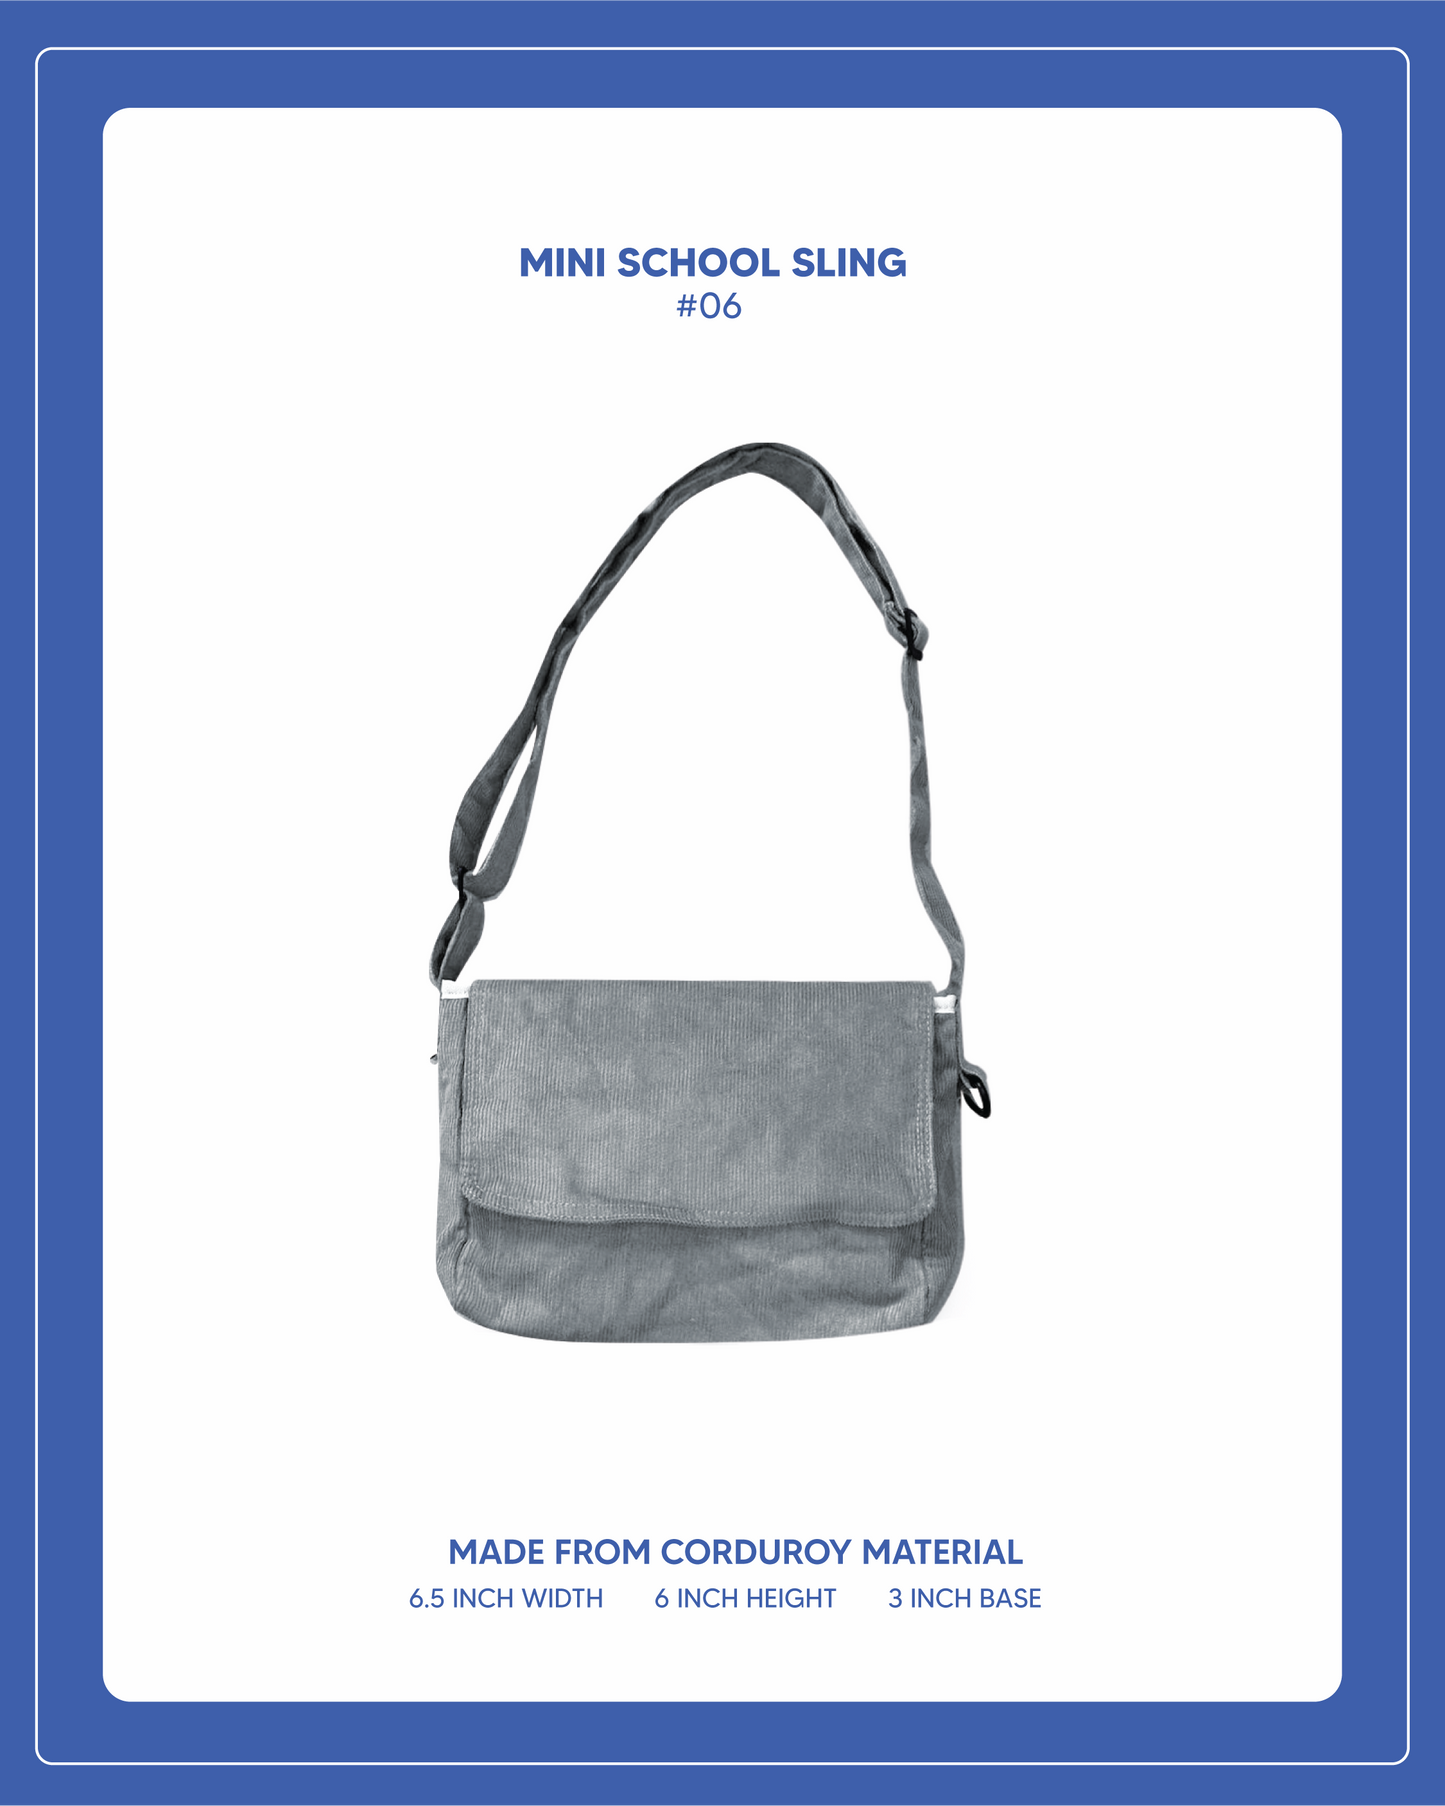 Corduroy Series - Mini/School Sling #06